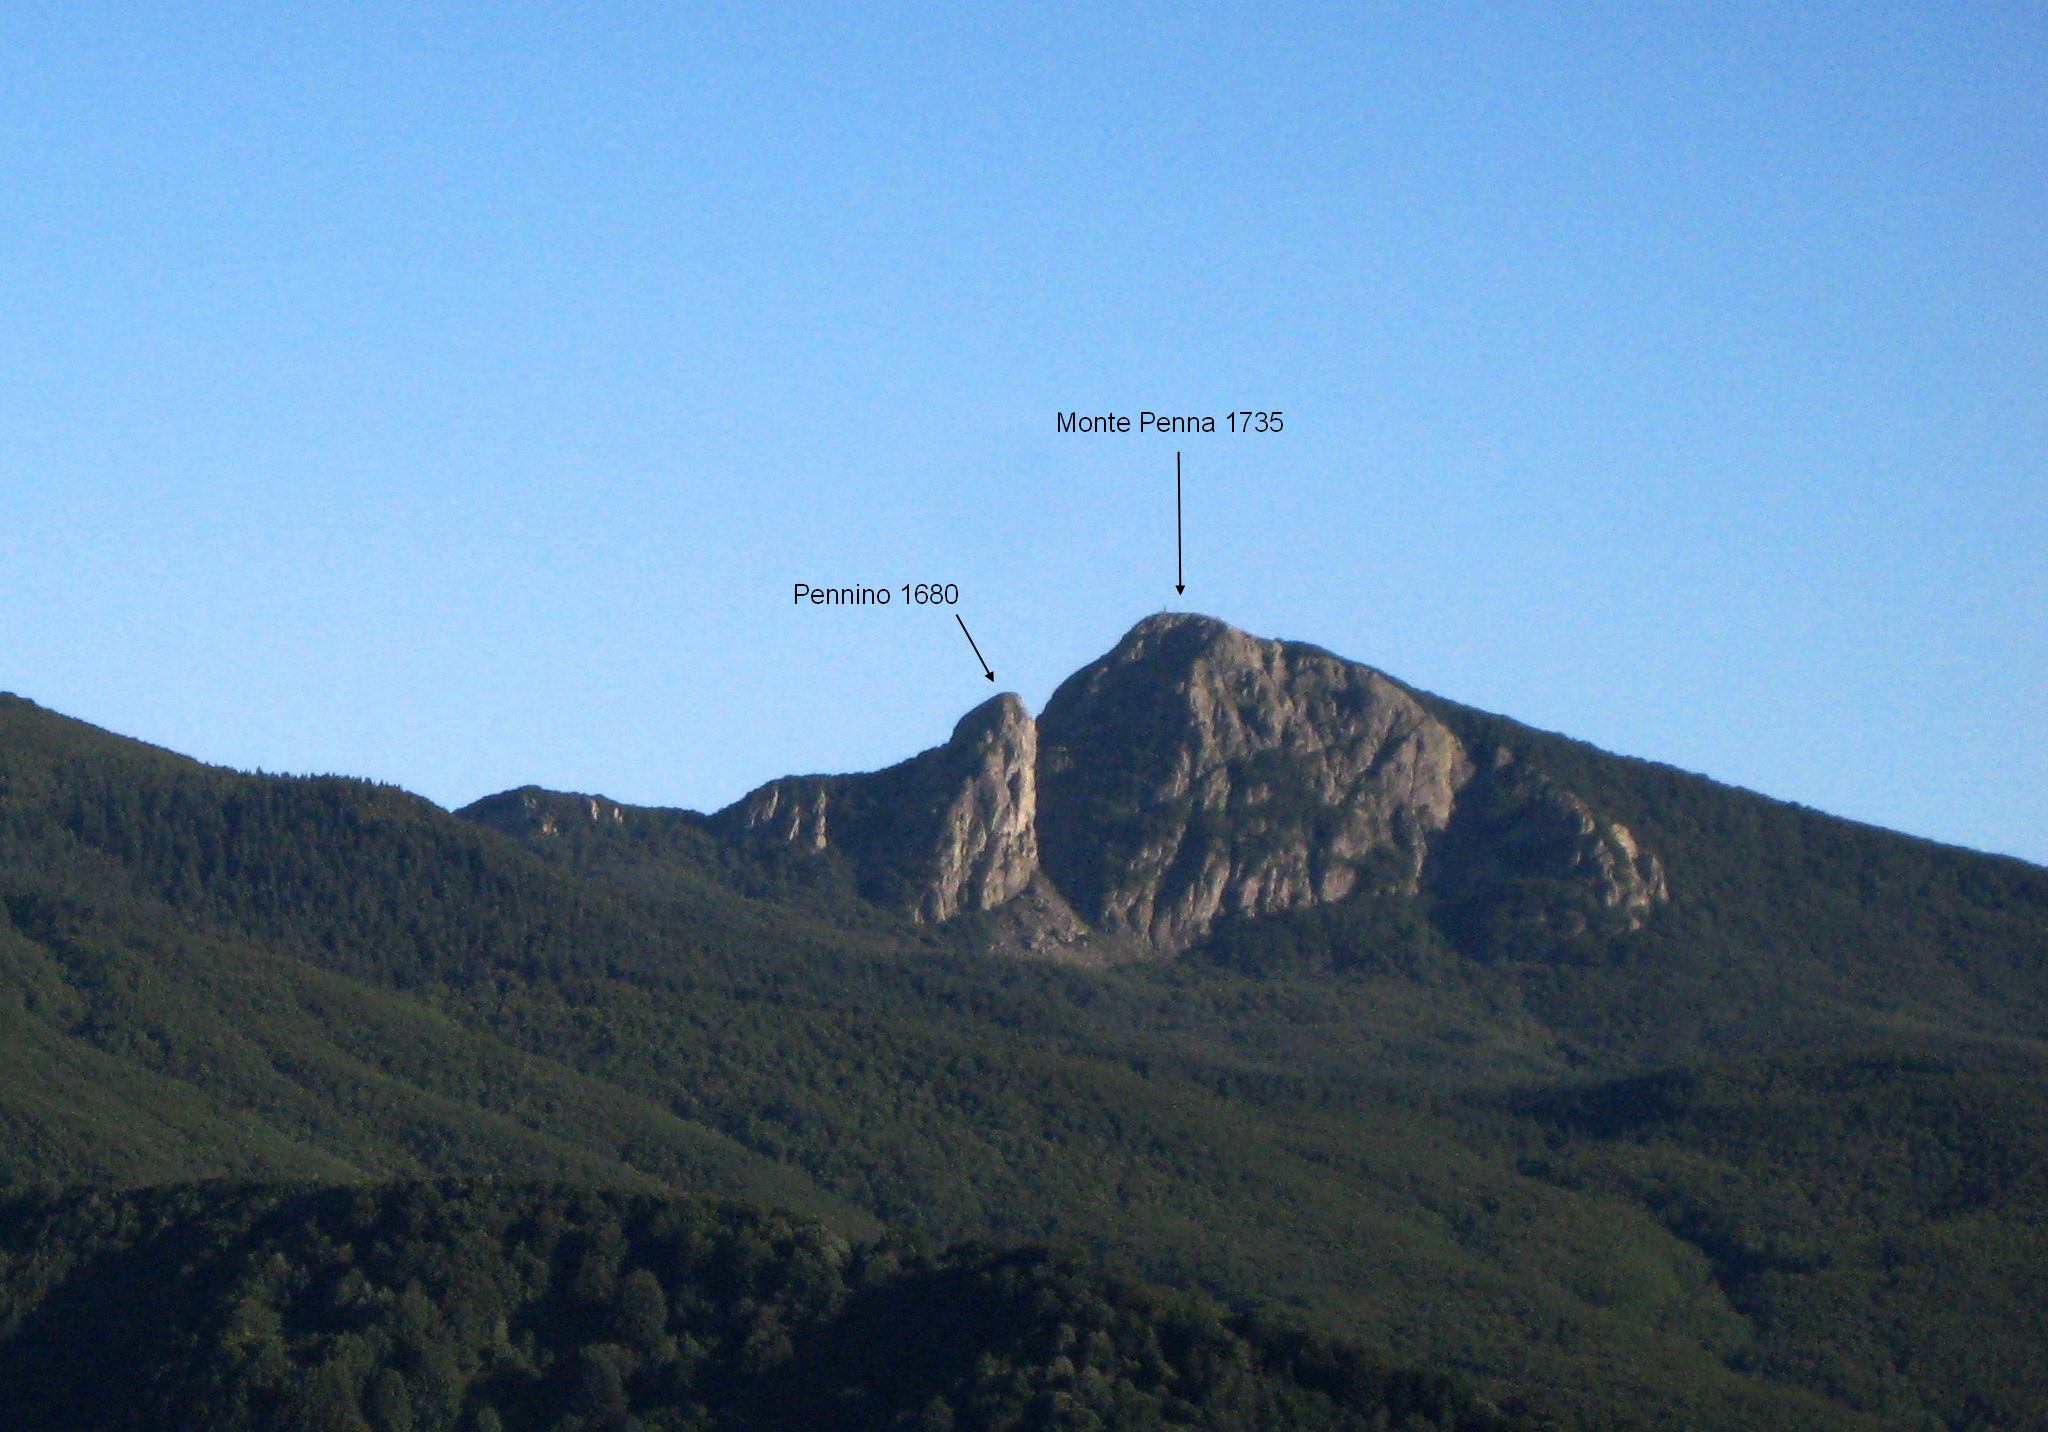 Monte Penna 1735m